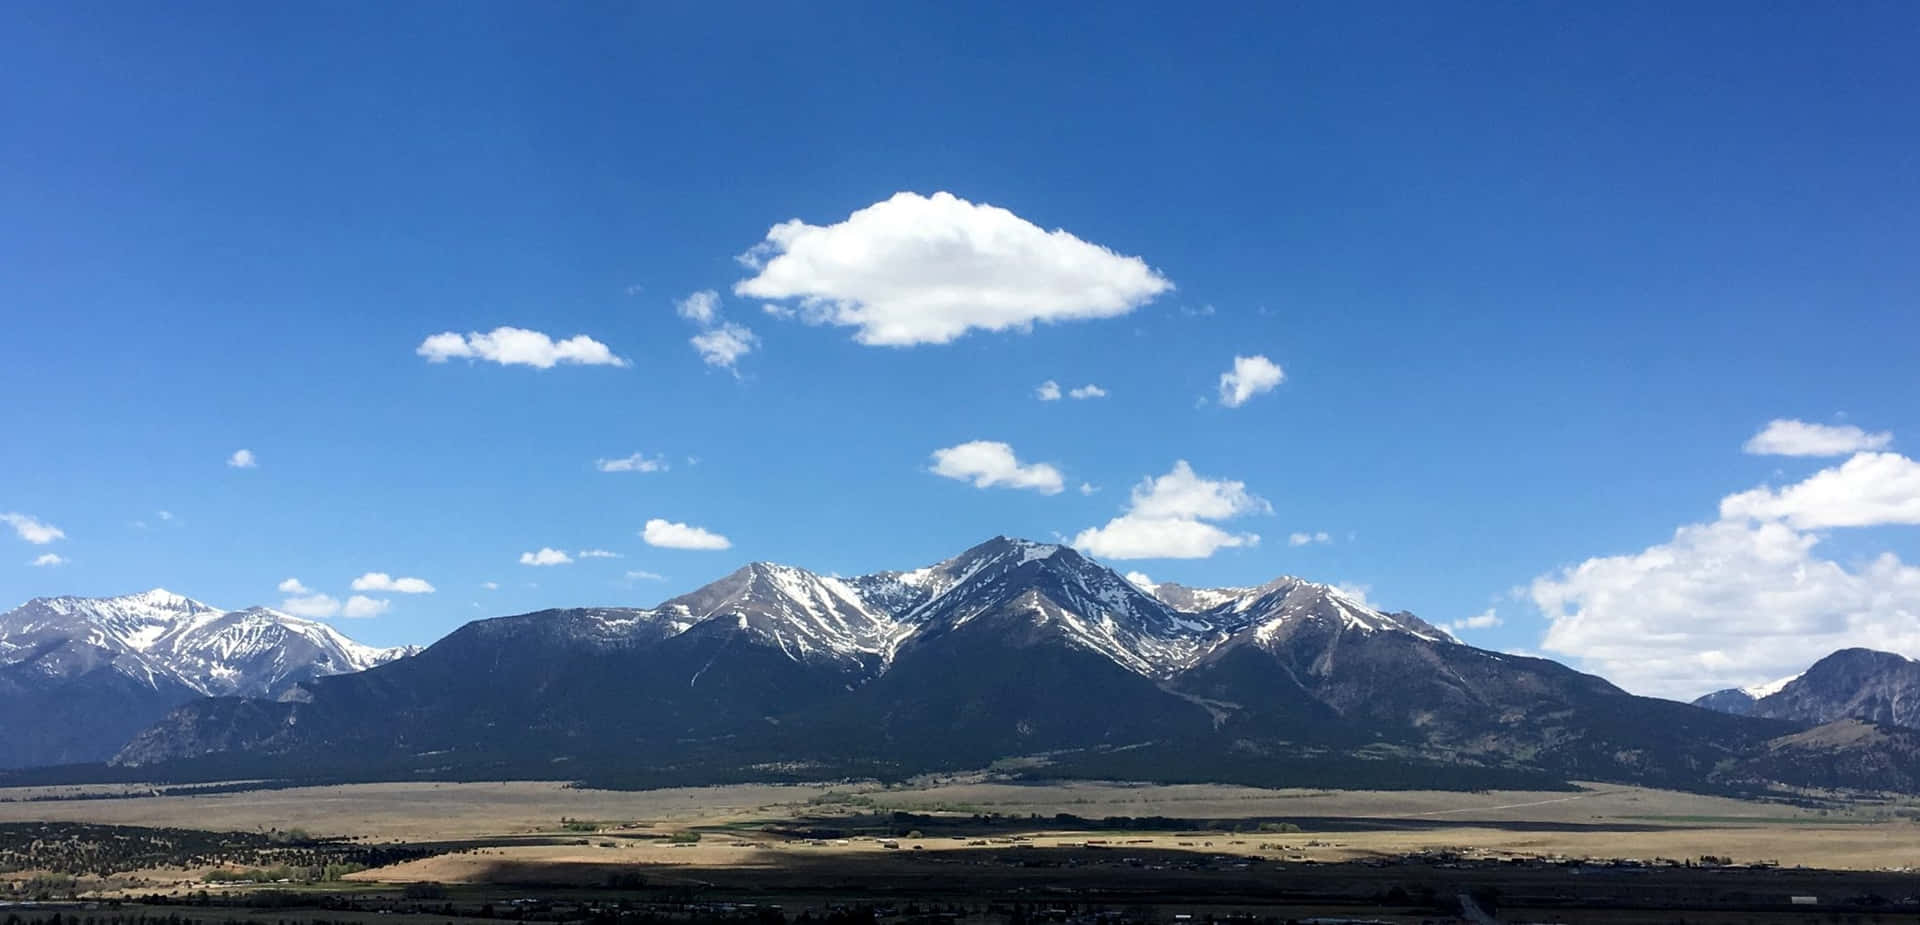 Admiring the beauty of Colorado Mountains